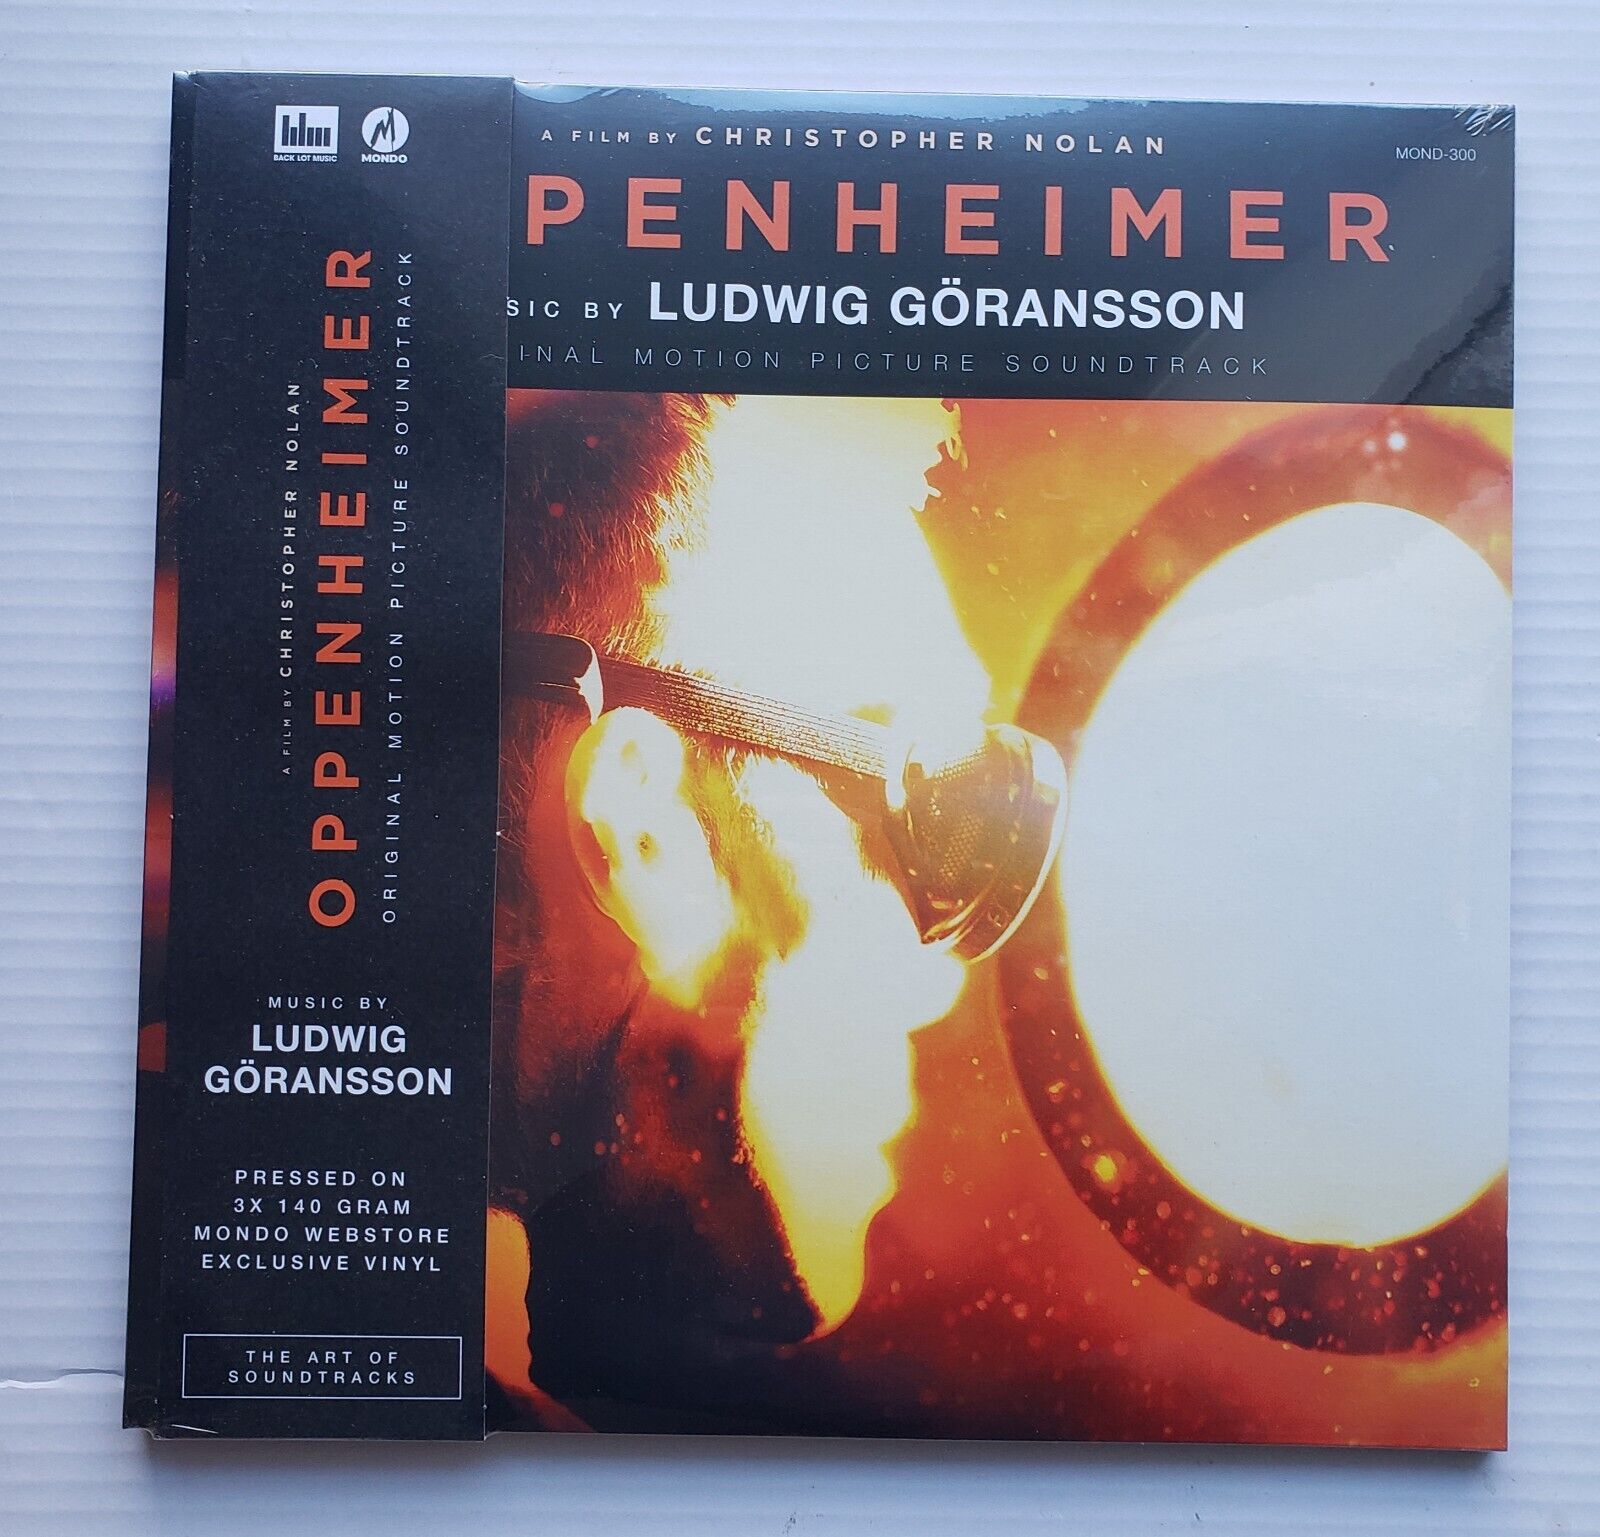 Oppenheimer Mondo Limited Exclusive Splatter Vinyl - Brand New - In Hand